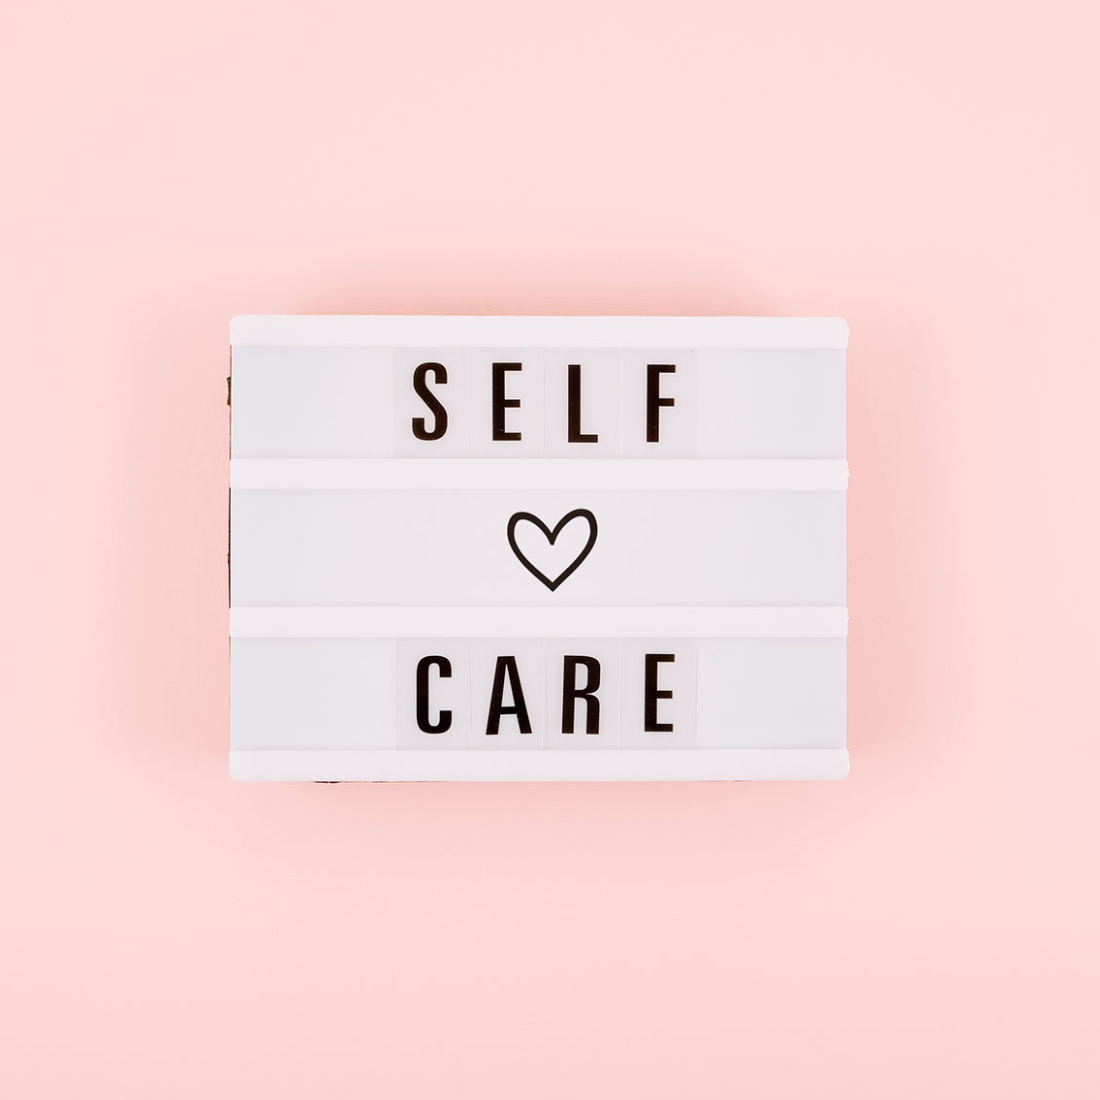 Self care light box